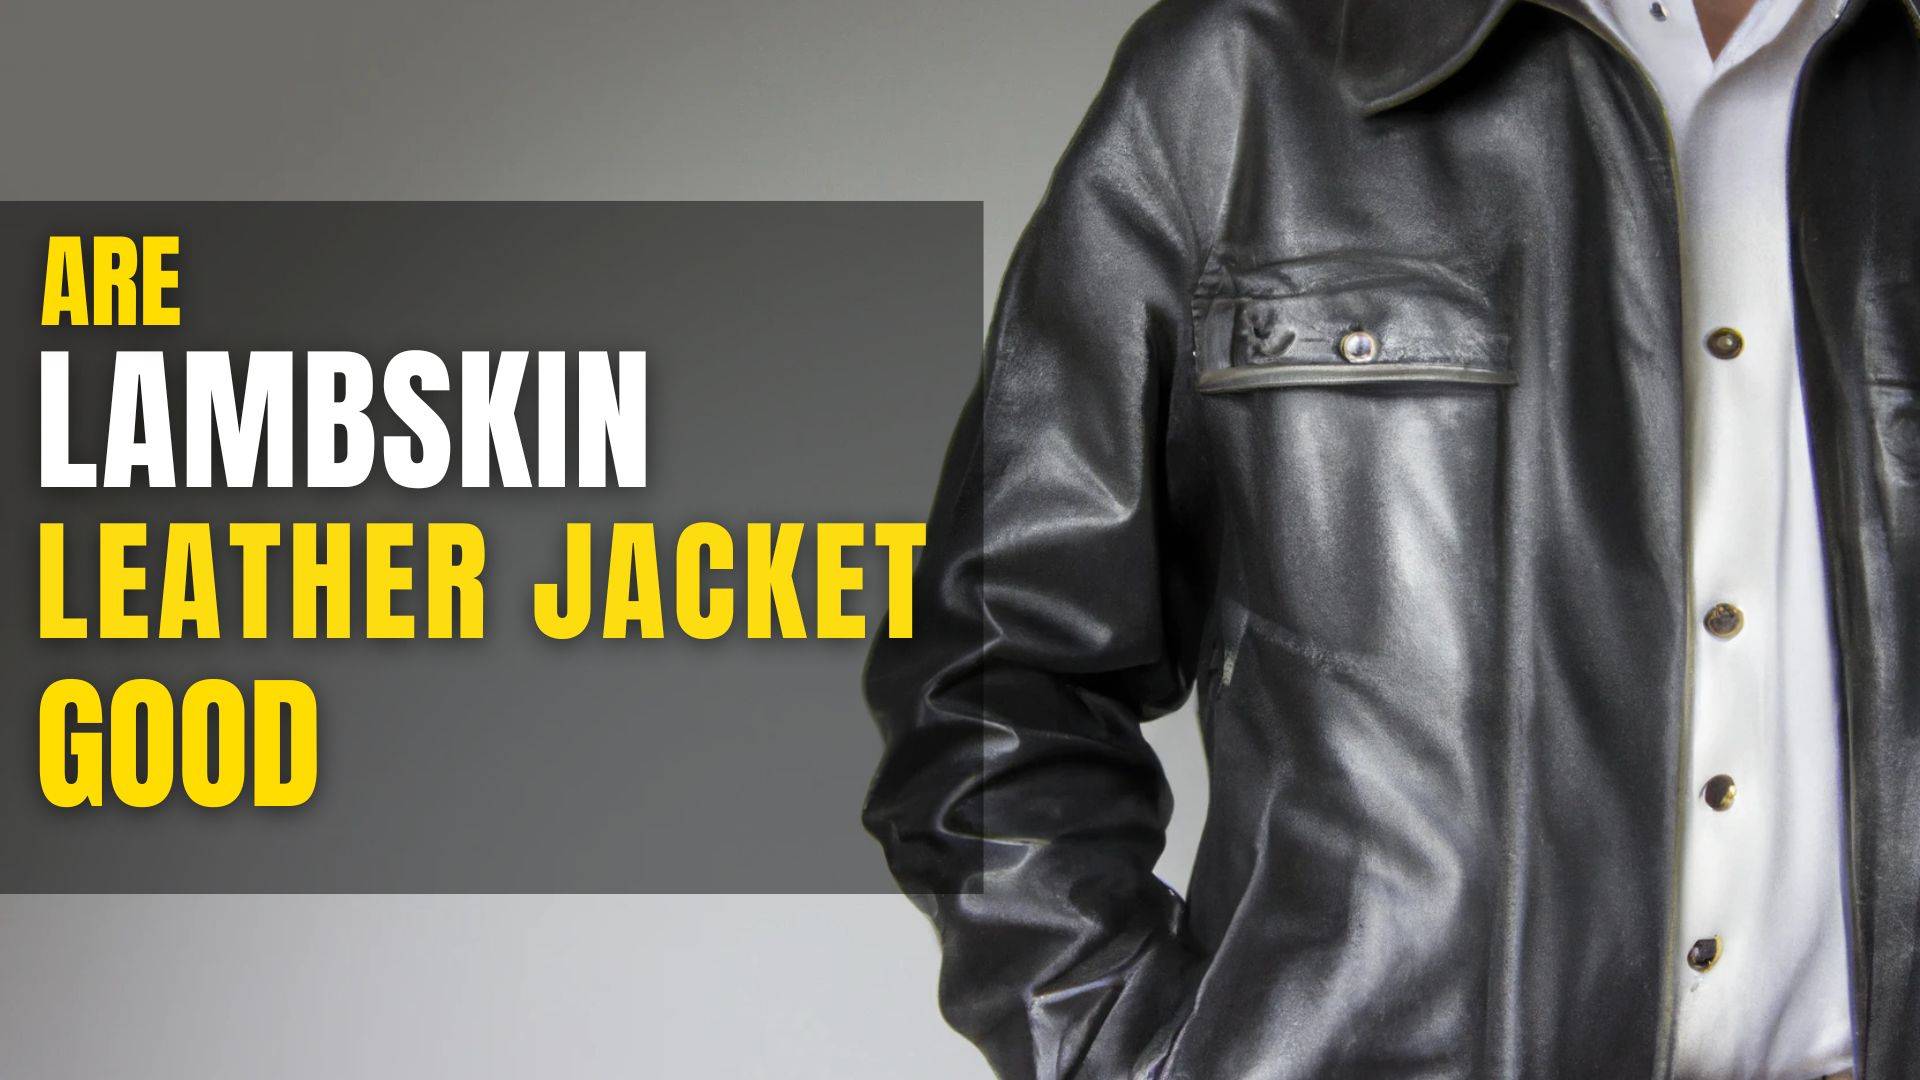 Are Lambskin Leather Jackets Good